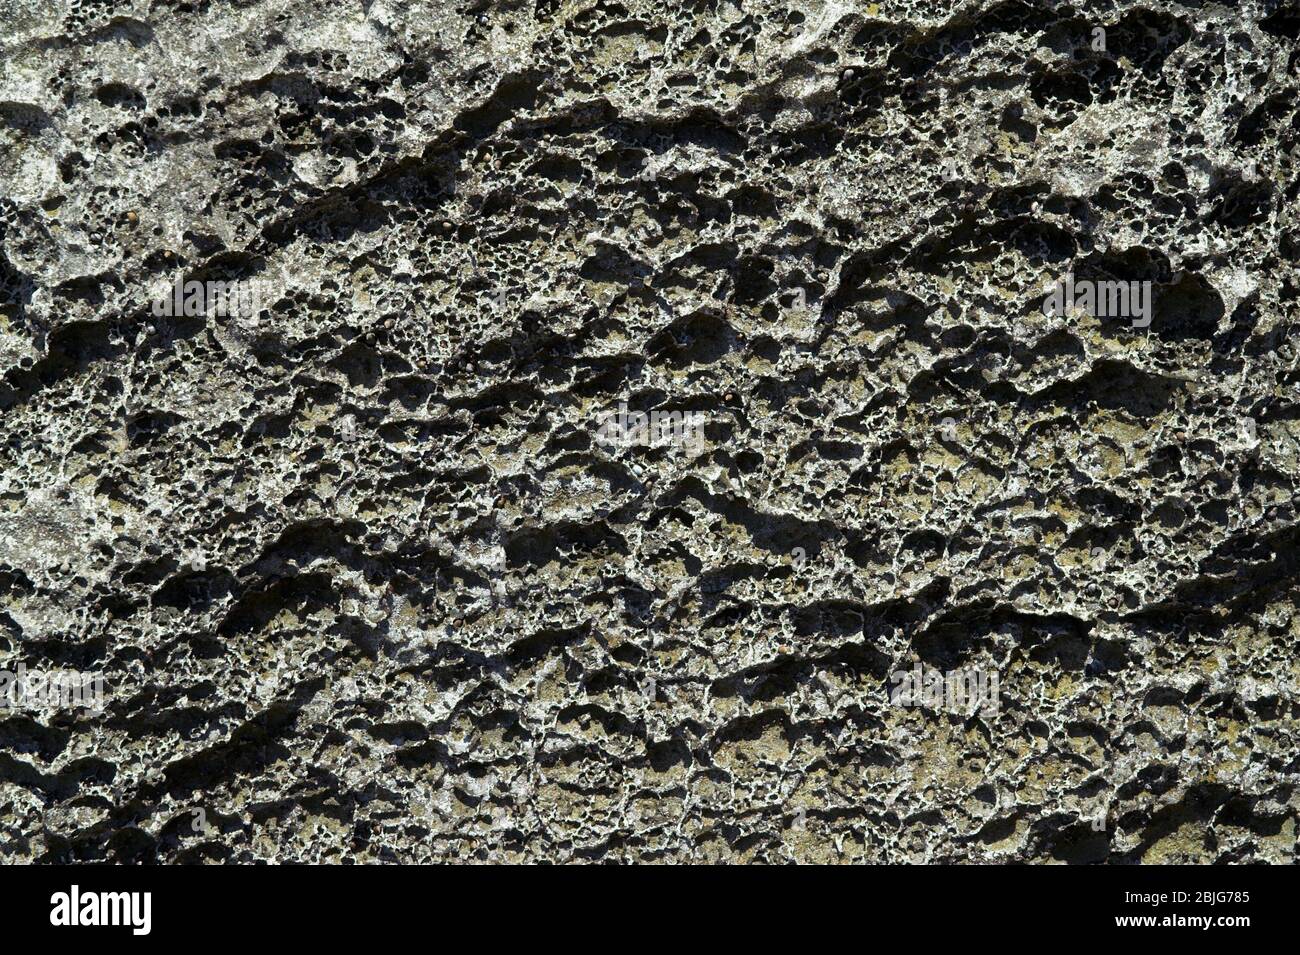 The rough texture of the surface of the rocks in closeup Die raue Textur der Oberfläche der Felsen in Nahaufnahme Chropowata powierzchnia skały 表面粗糙 Stock Photo